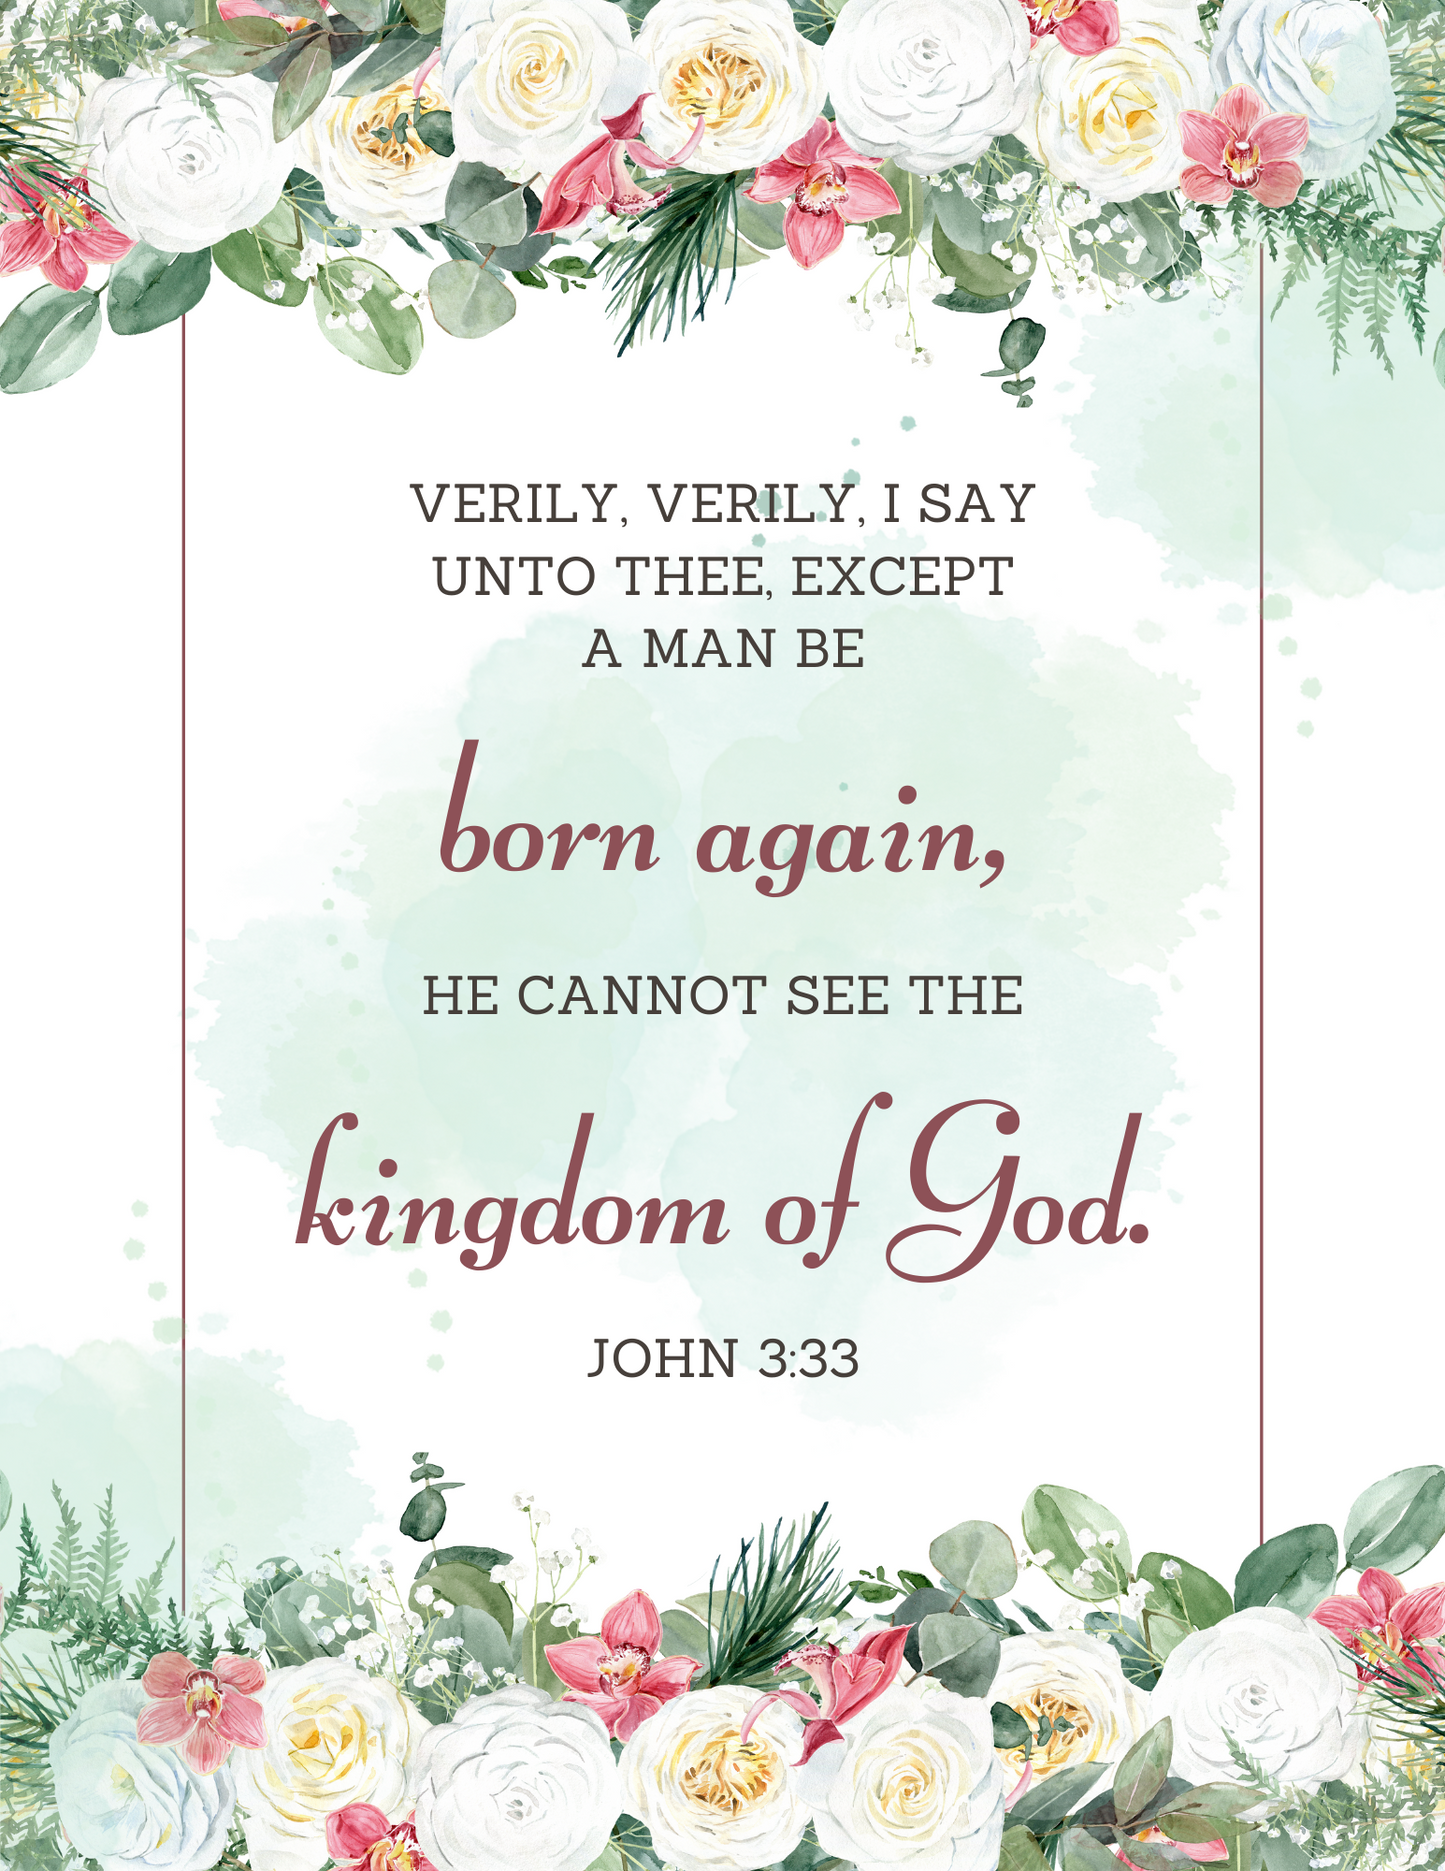 Bible Verse Posters: Words of Jesus from the Gospel of John